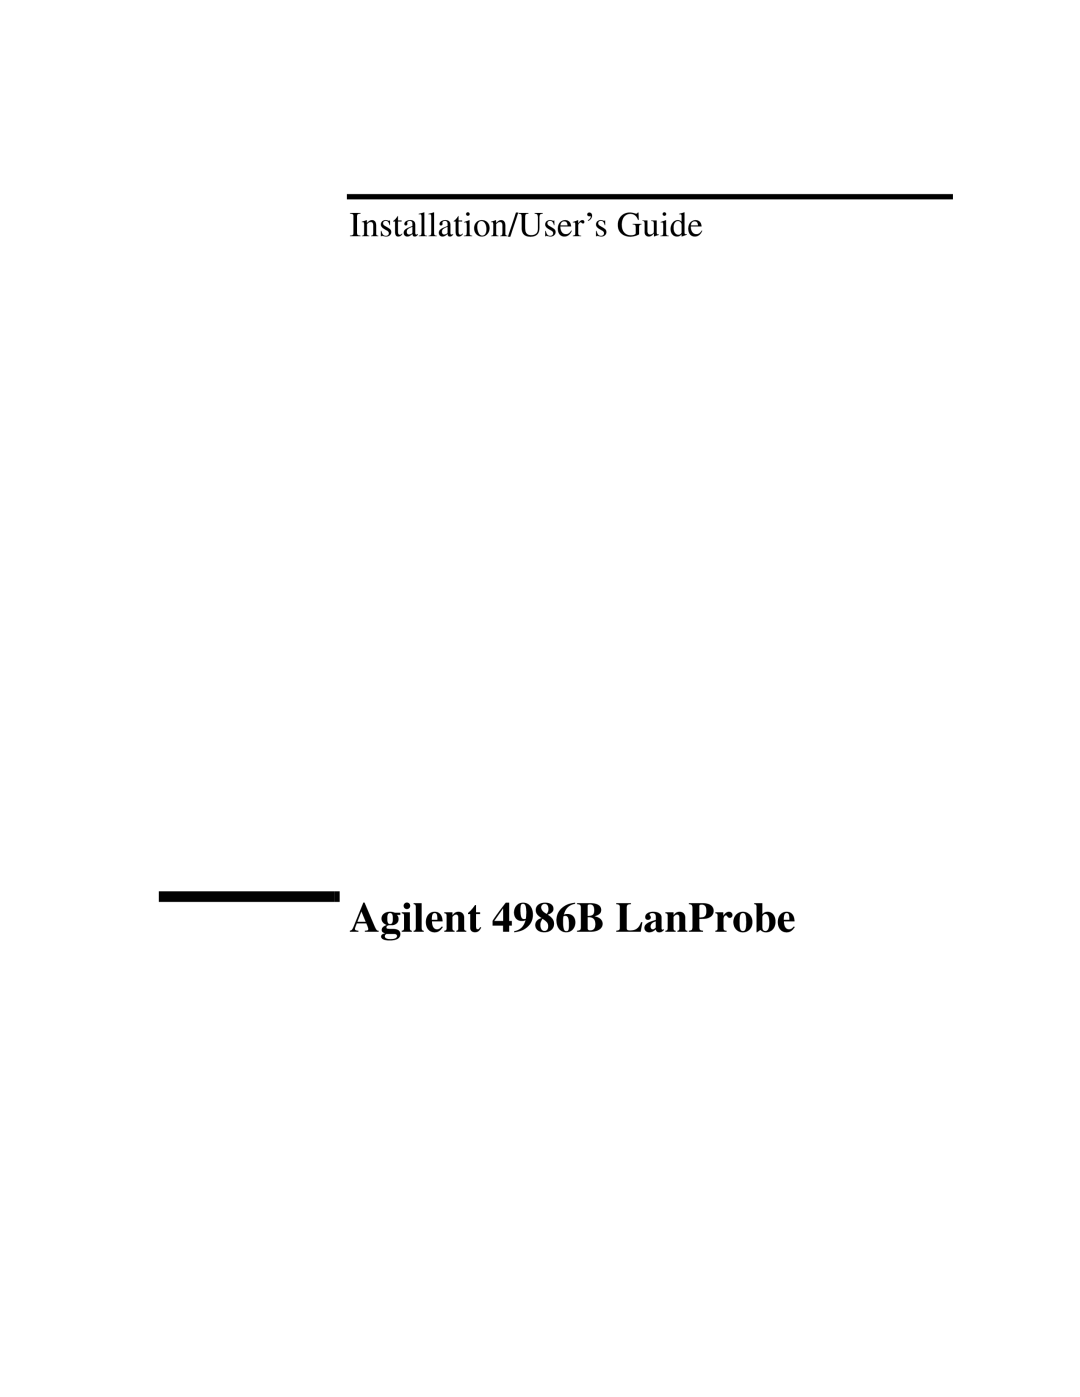 IBM manual Agilent 4986B LanProbe, Installation/User’s Guide 